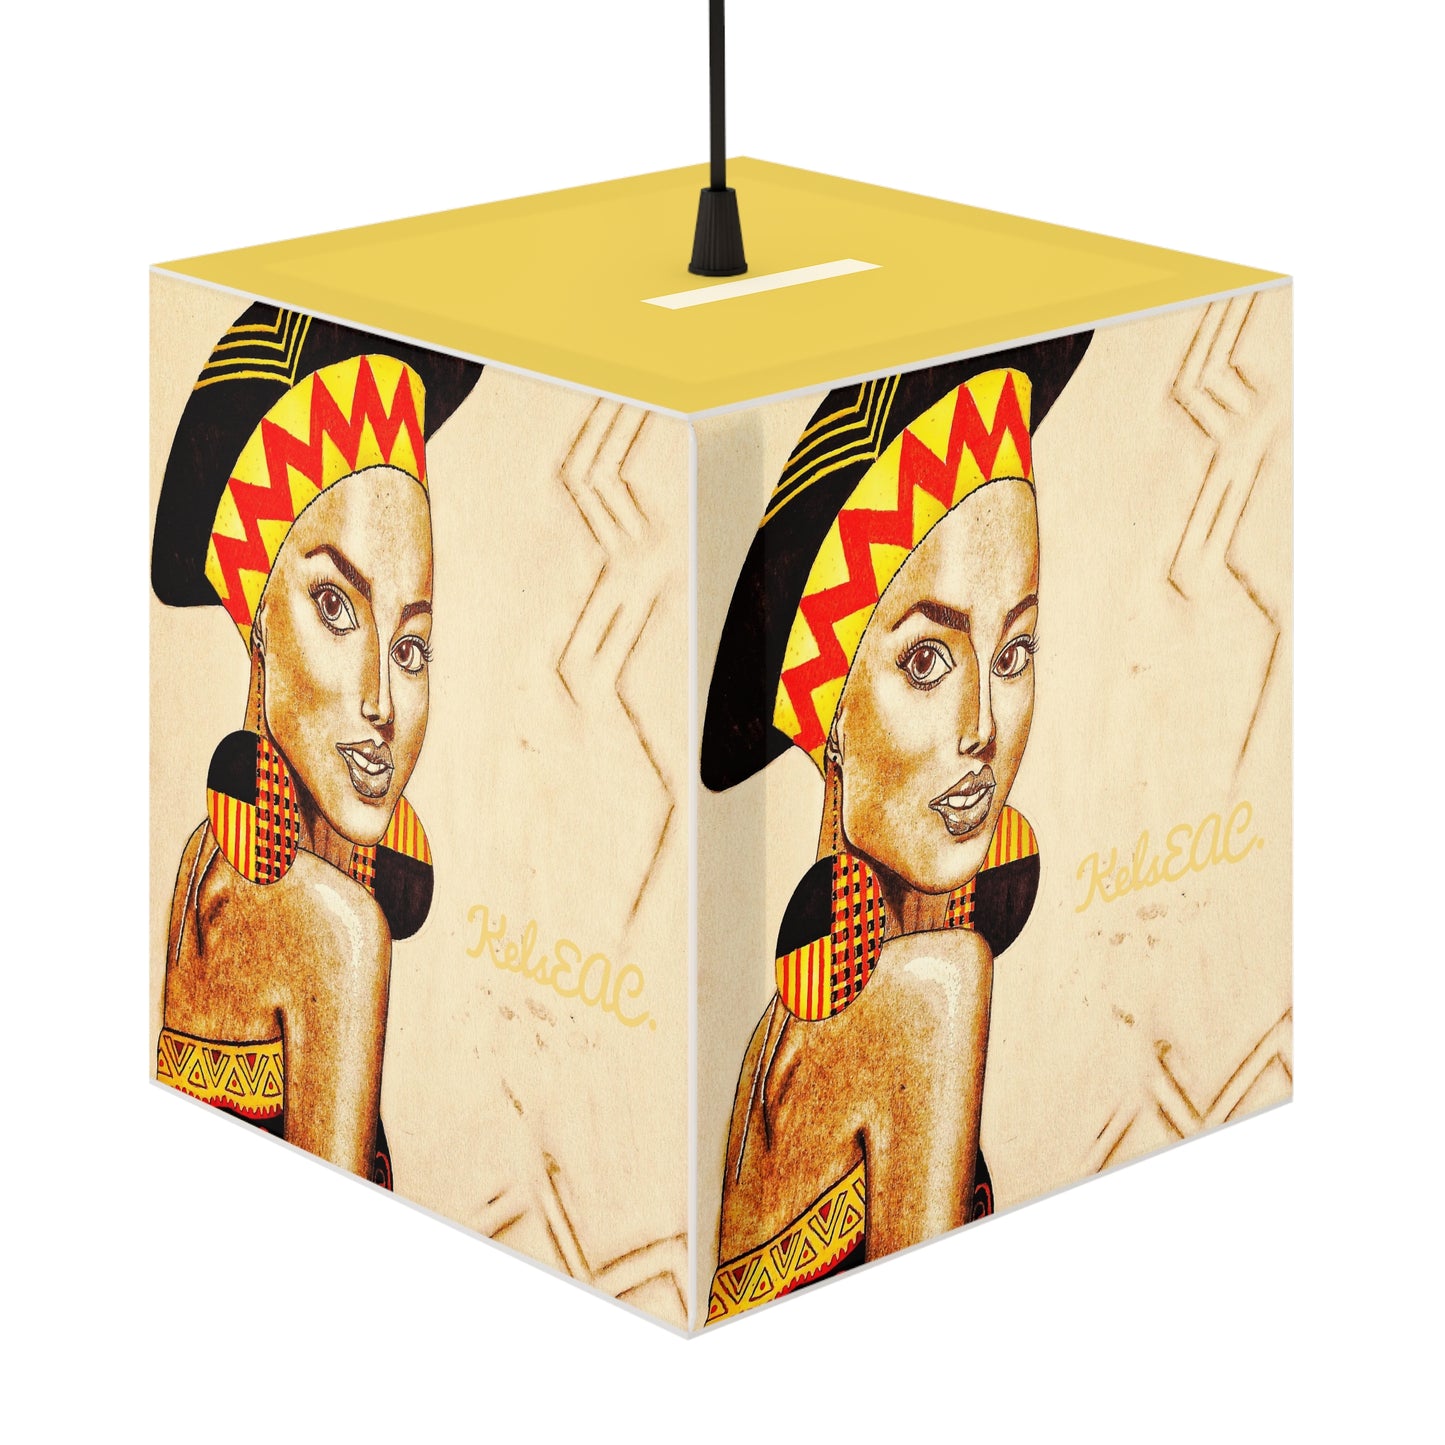 Stylish Portica Yellow Light Cube Lamp